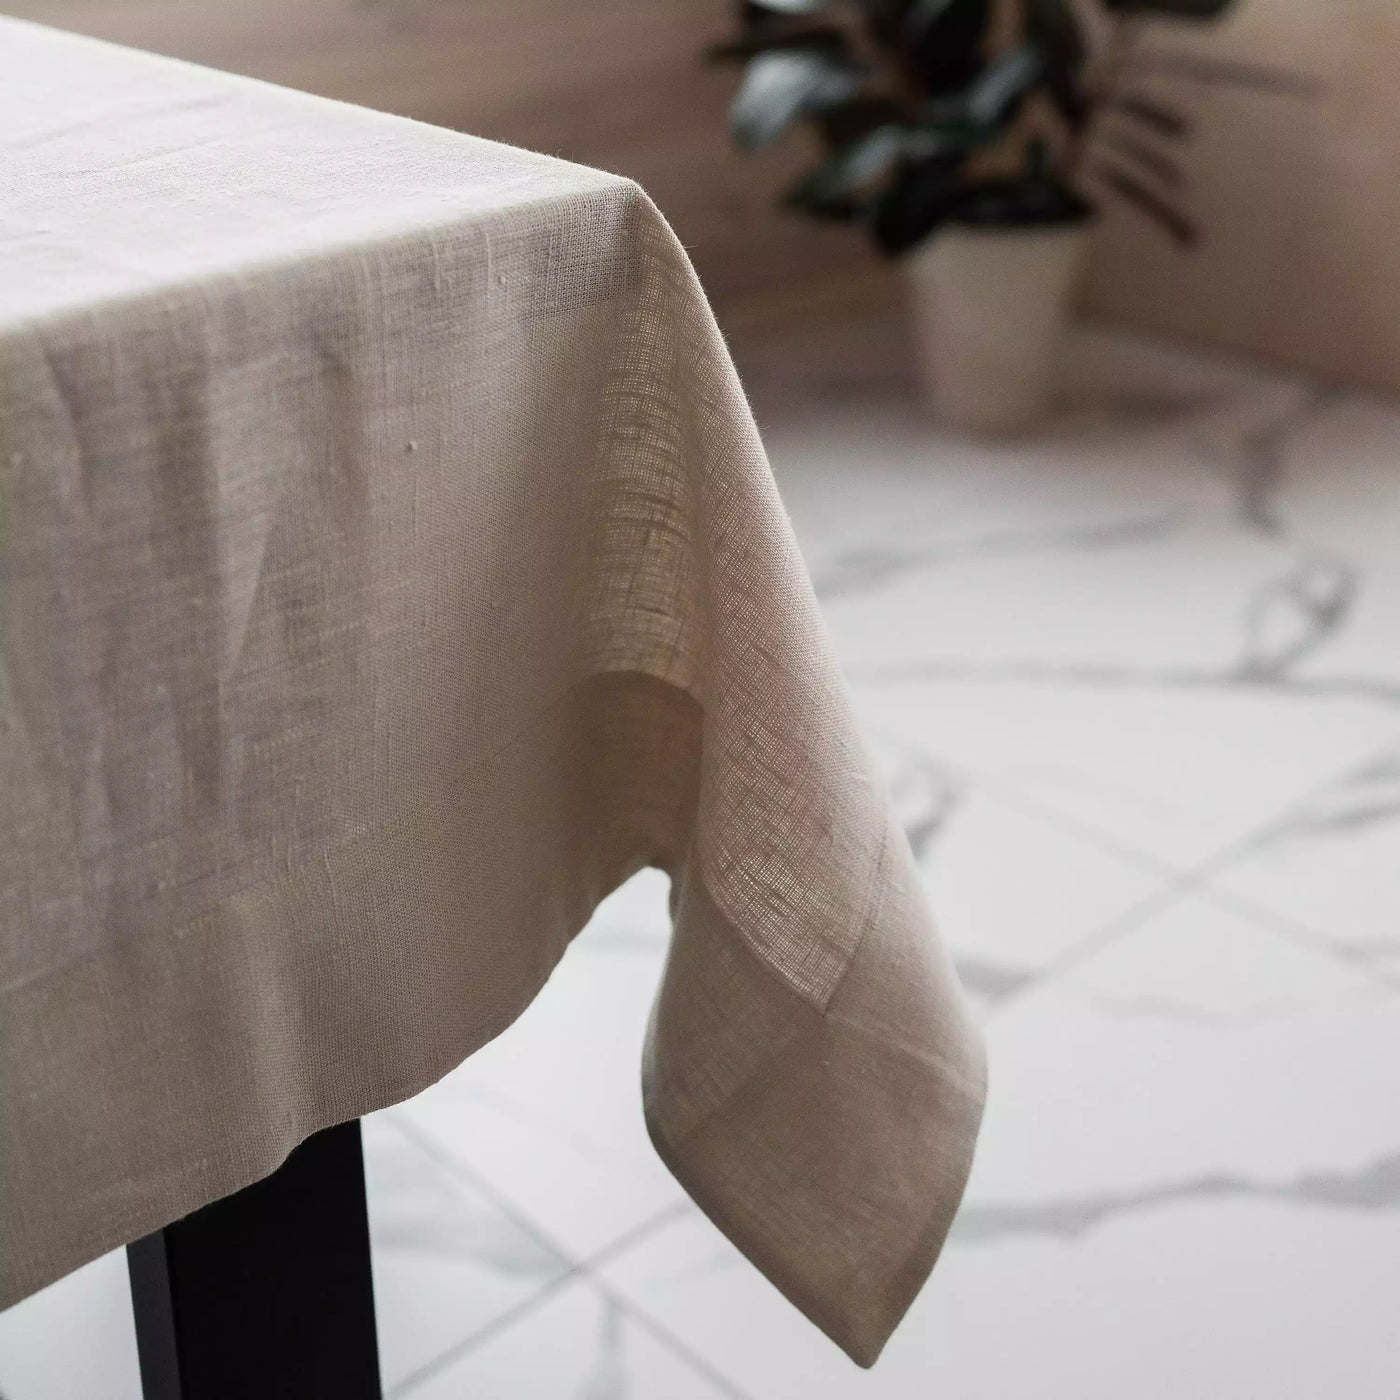 Buy online 100% Linen Tablecloth 140x180 Natural Linen Color 3